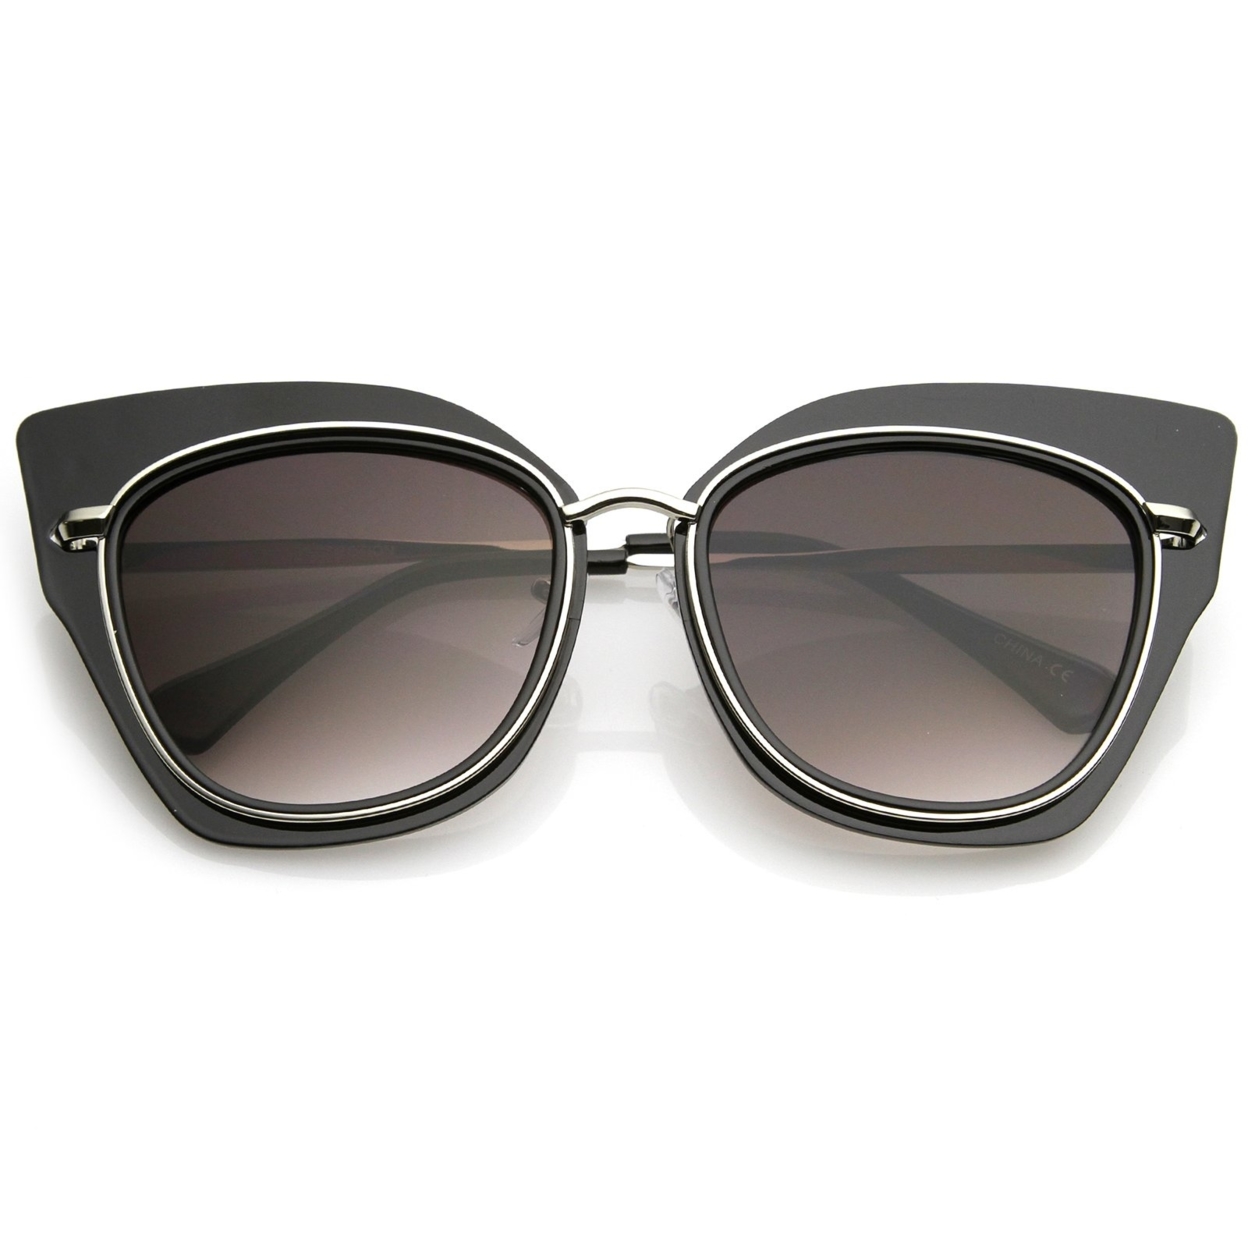 Women's Oversize Metal Trim Slim Arms Super Flat Lens Cat Eye Sunglasses 57mm - Black-Silver / Lavender